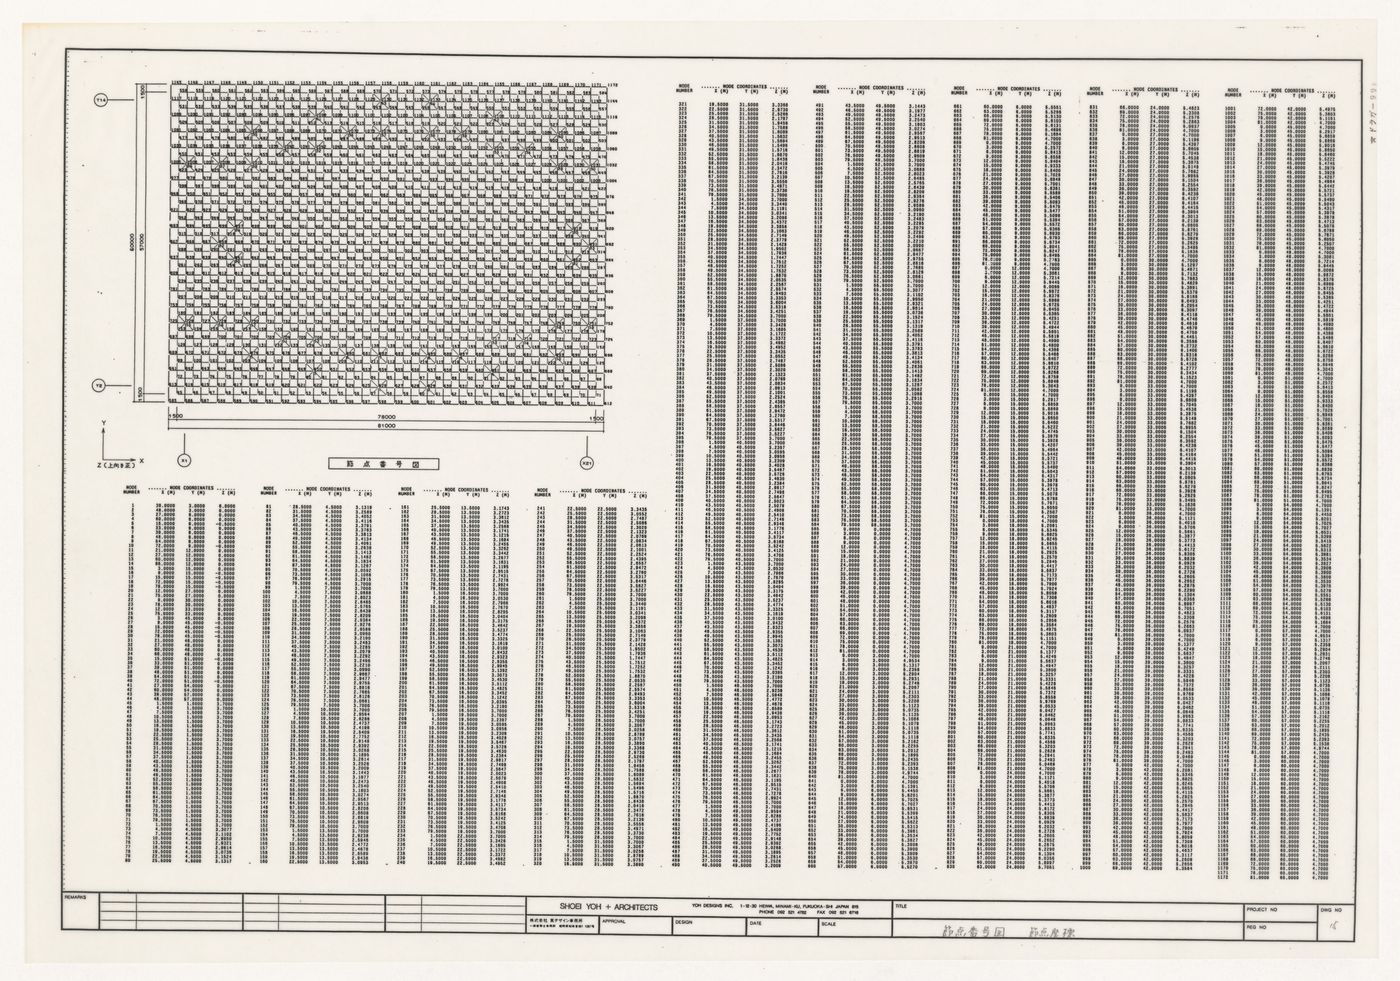 Table of node coordinates for roof of Galaxy Toyama Gymnasium, Imizu, Japan